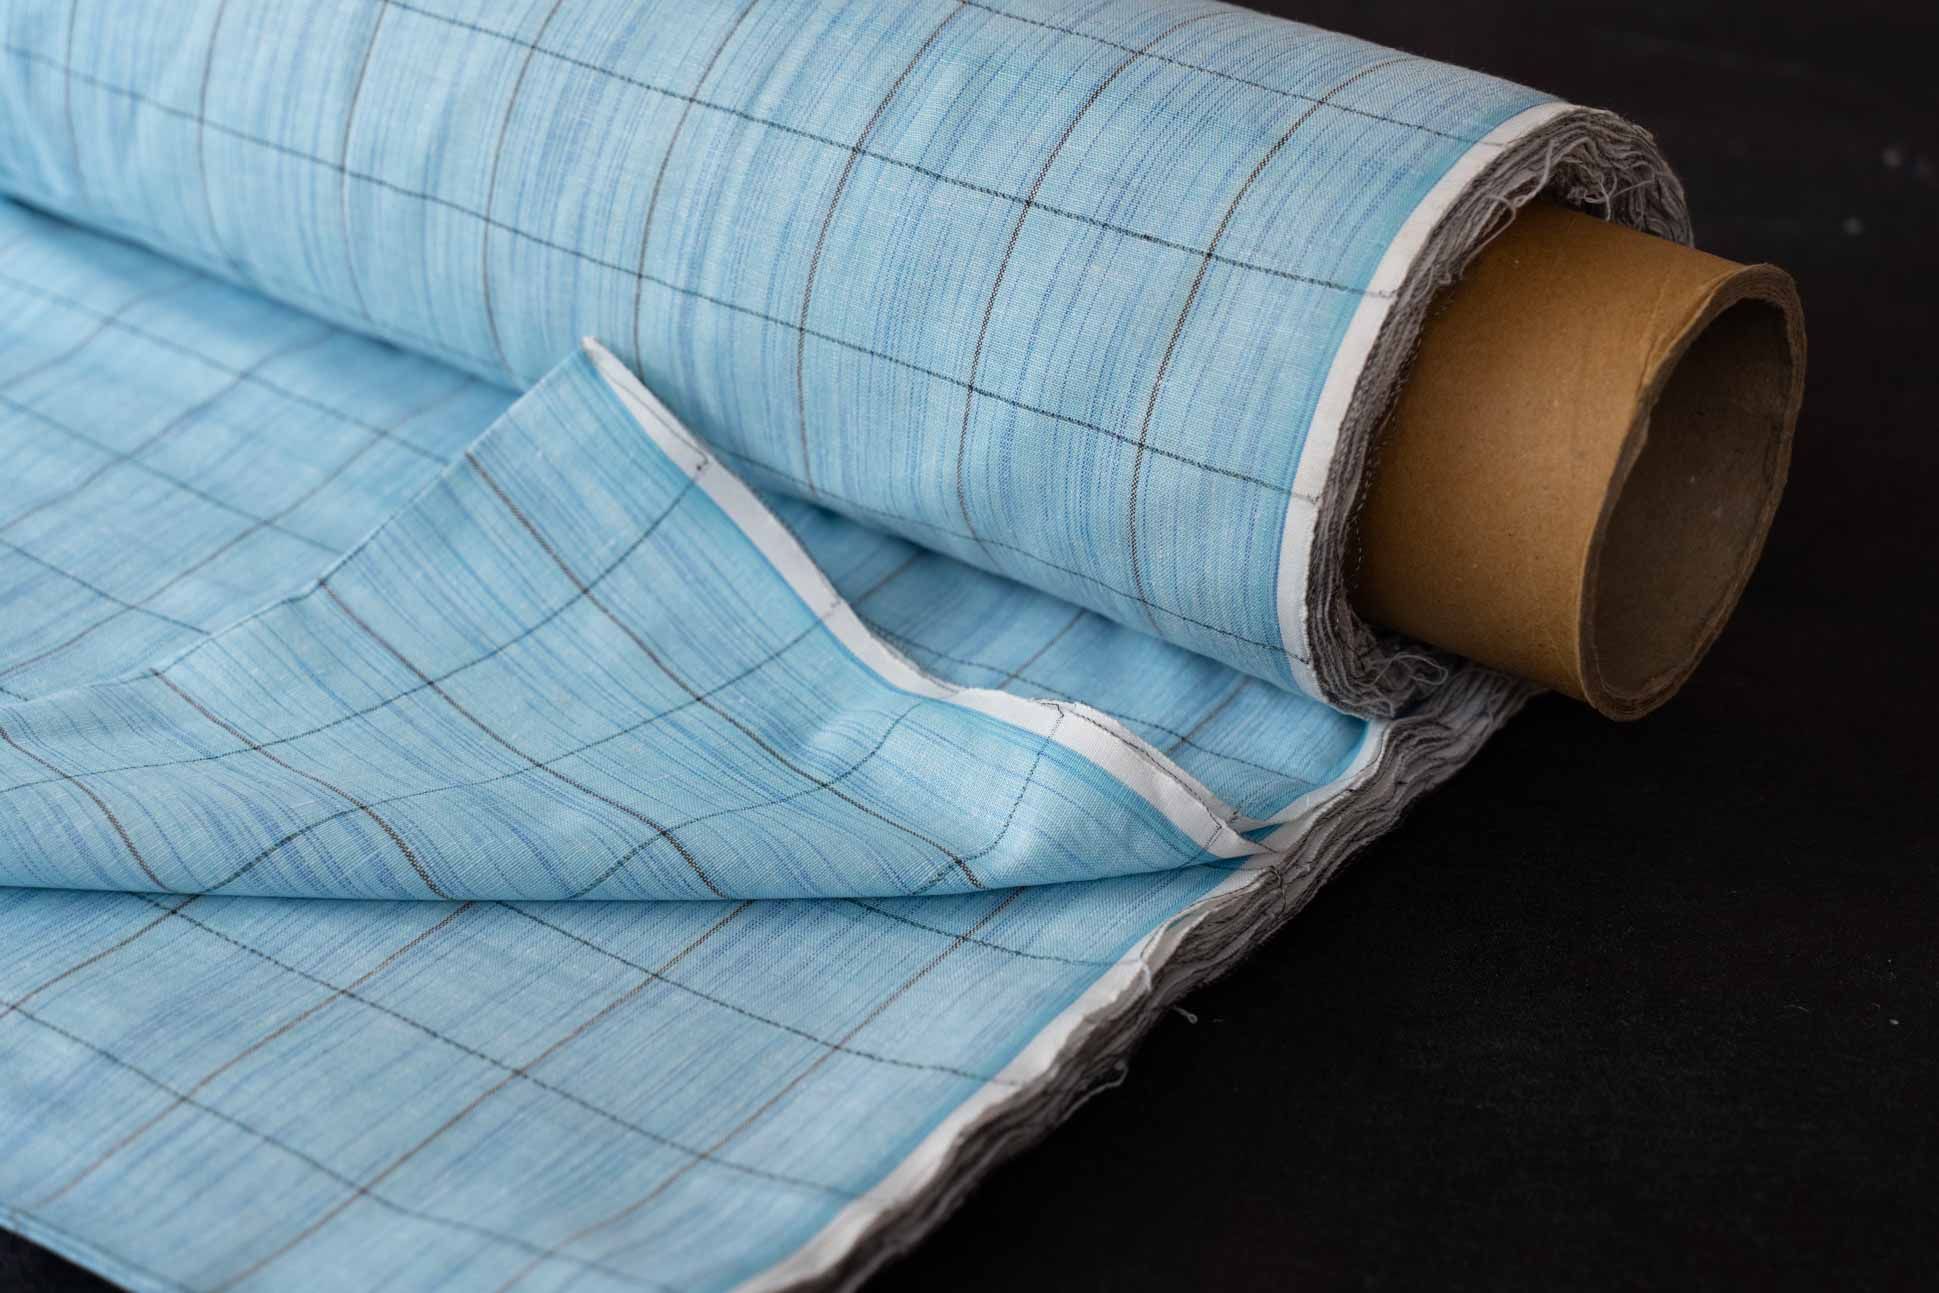 Blue Checks Khari Cotton Blend Fabric